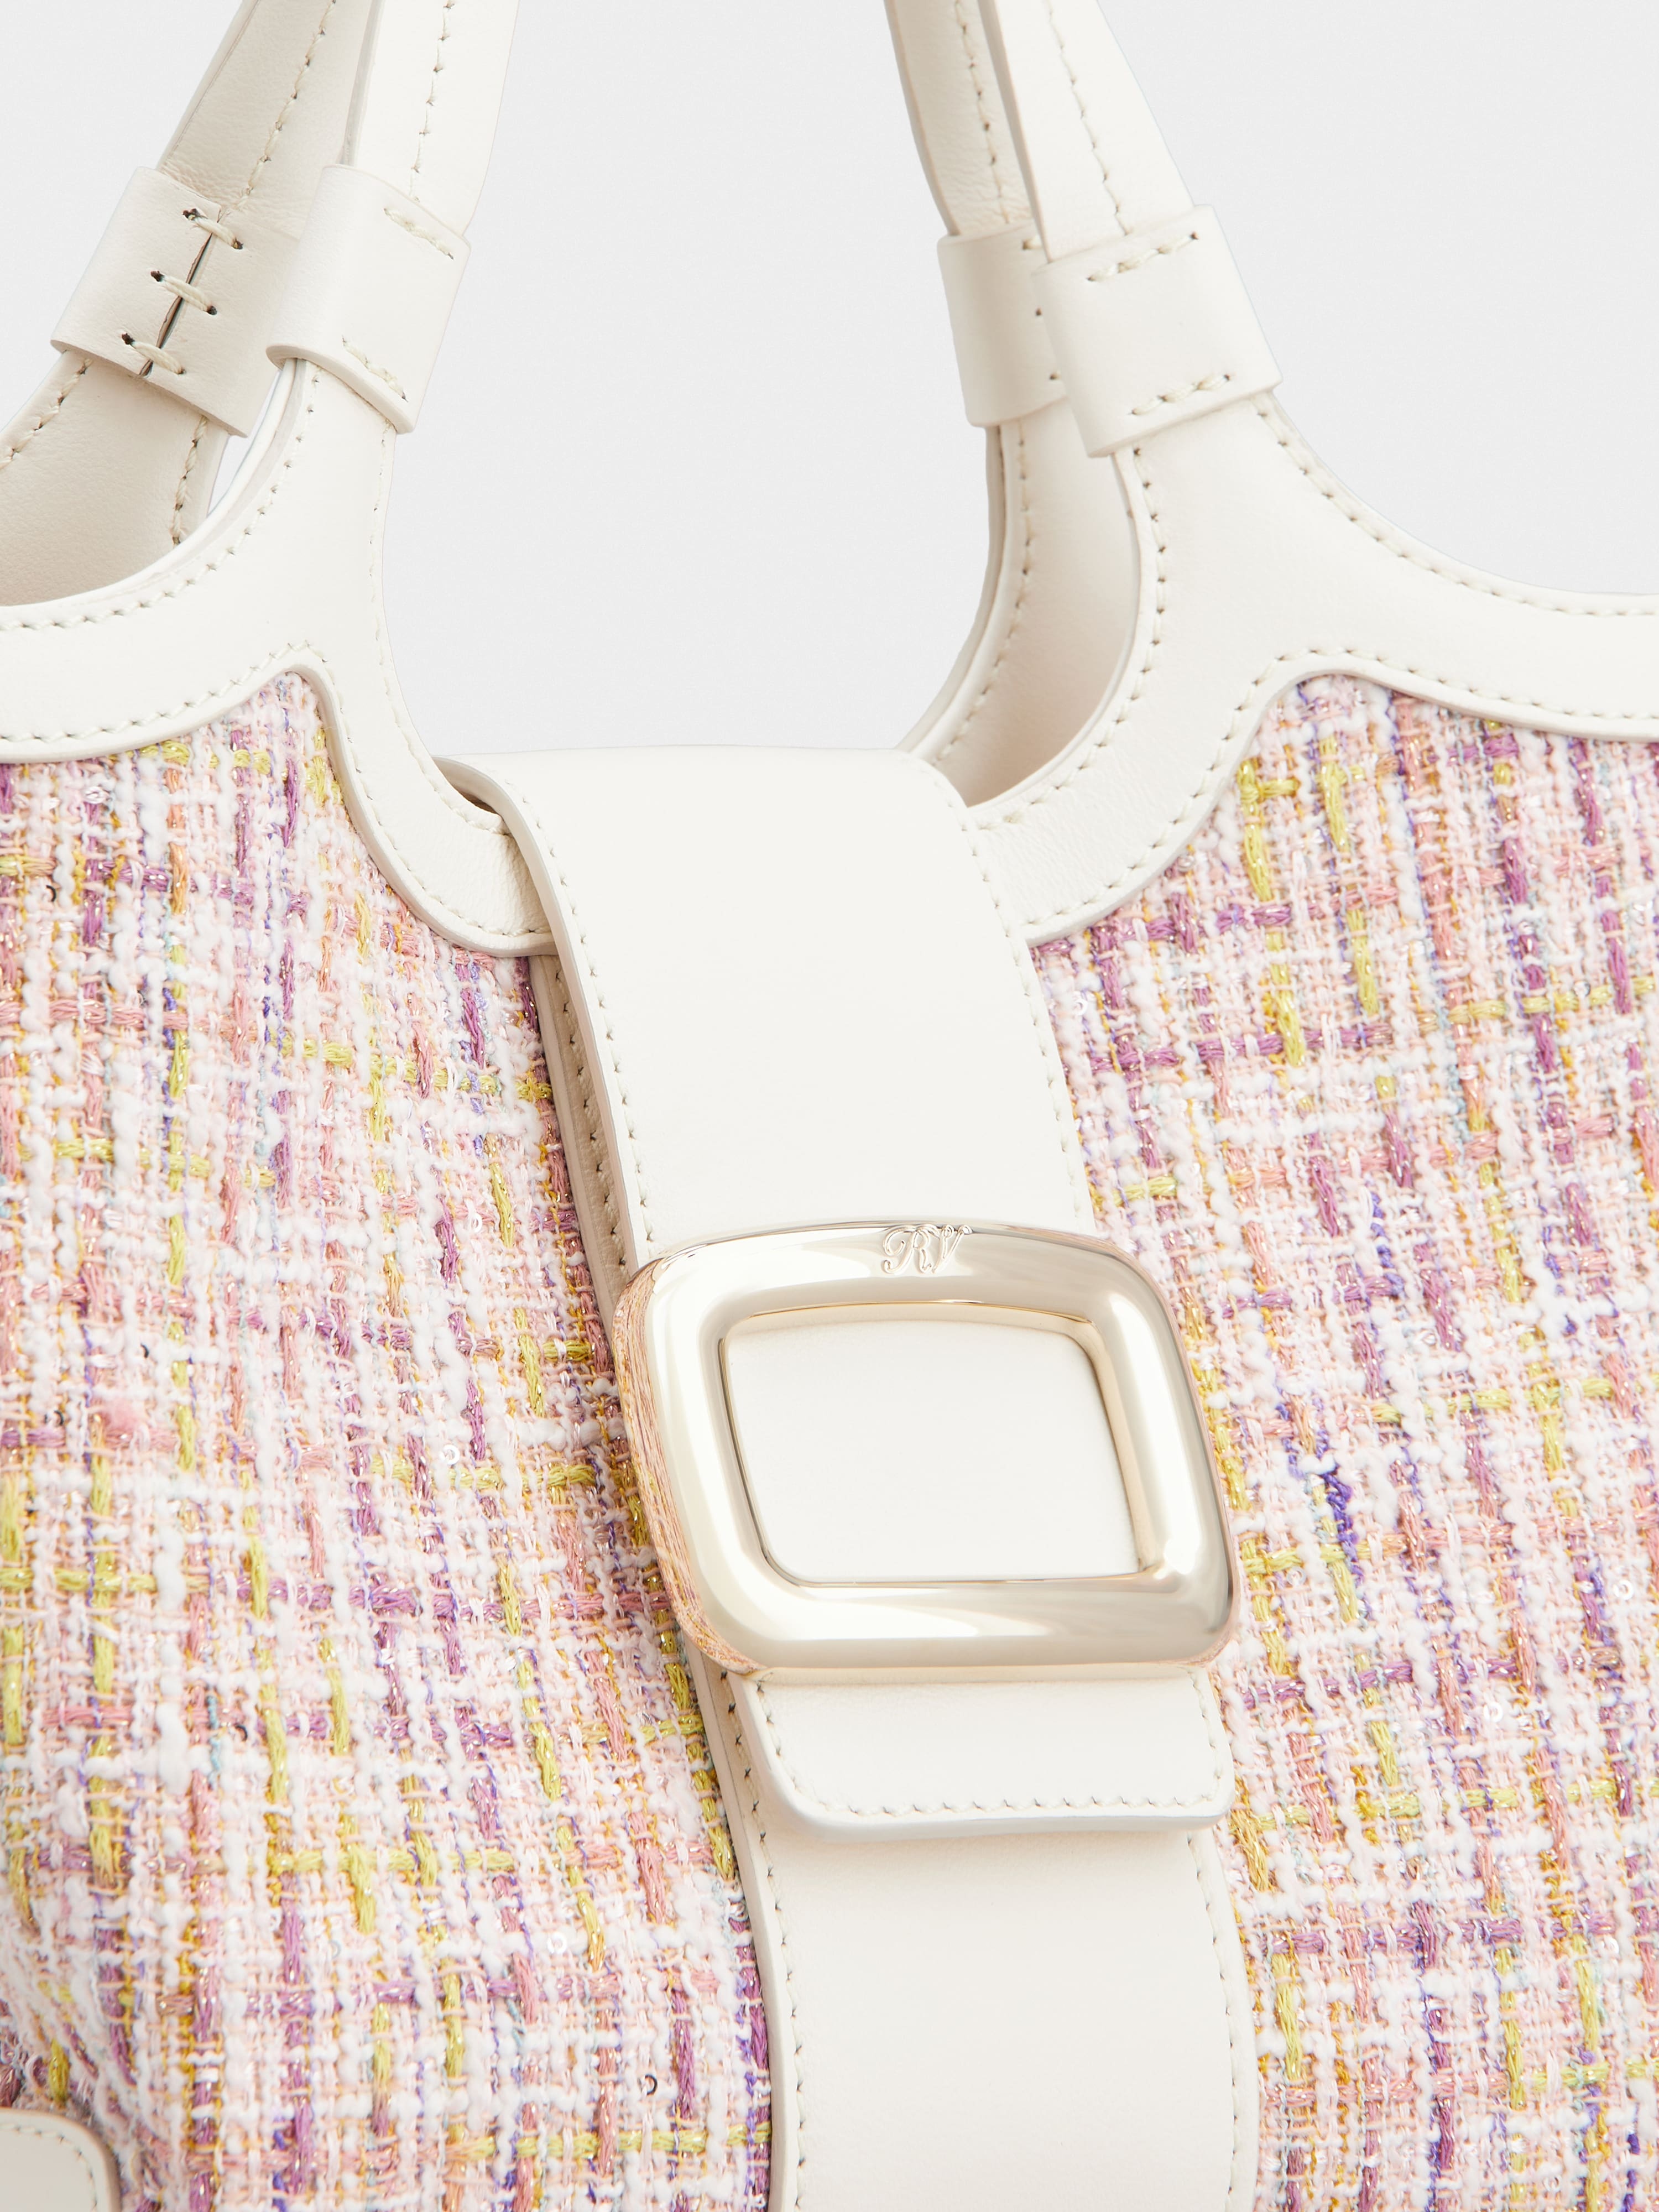 Viv' Choc Mini Shopping Bag in Fabric - 9